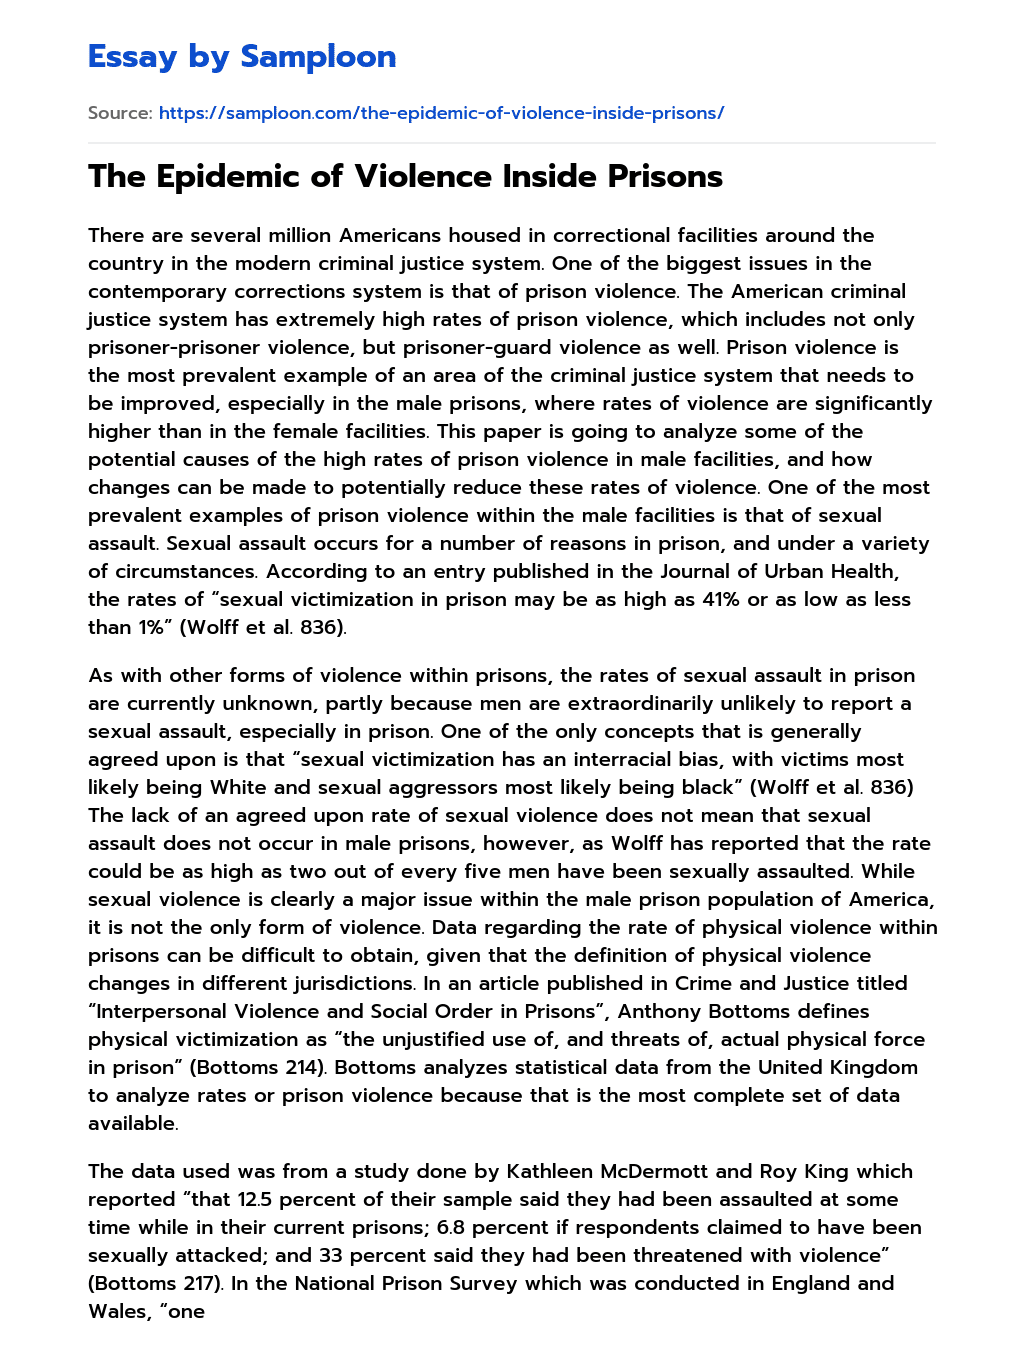 The Epidemic of Violence Inside Prisons essay